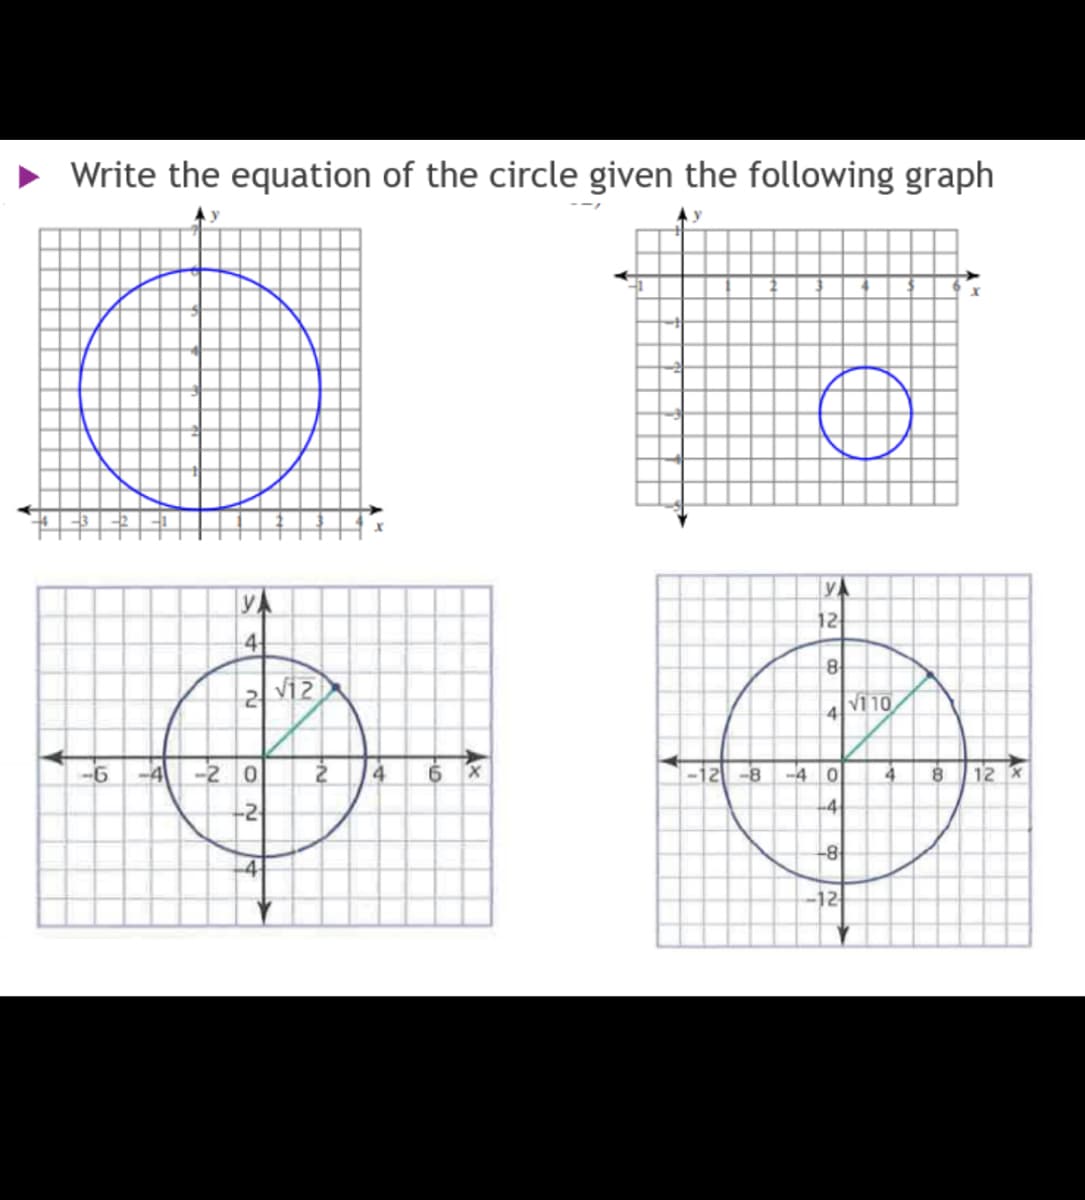 • Write the equation of the circle given the following graph
yA
YA
12
4
2 vi2
Vi10
4
-6 -4 -2 0
6.
-12 -8
-4 0
4
12
-2
-4
-12
4.
+ ru
